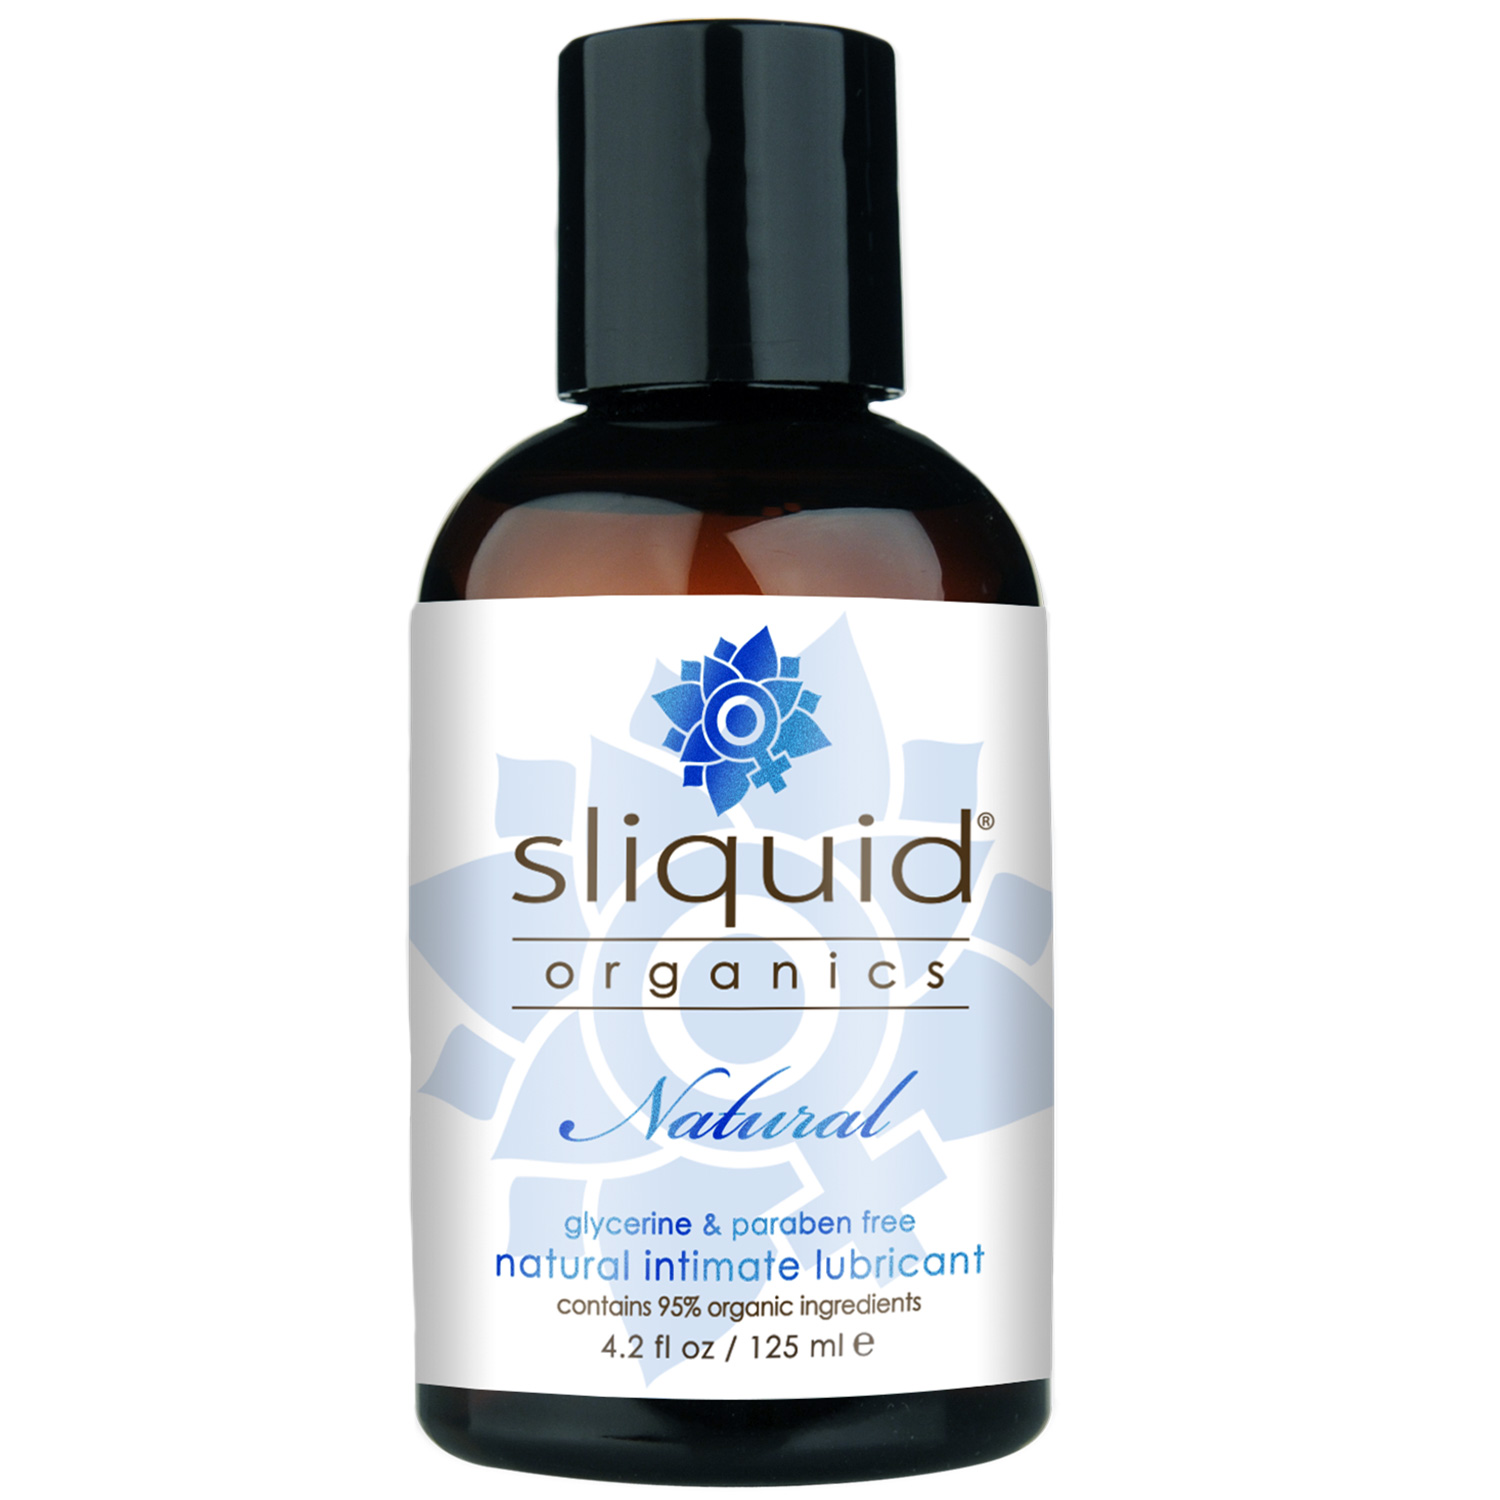 Sliquid Organics Natural Glidecreme 125 ml - Clear thumbnail